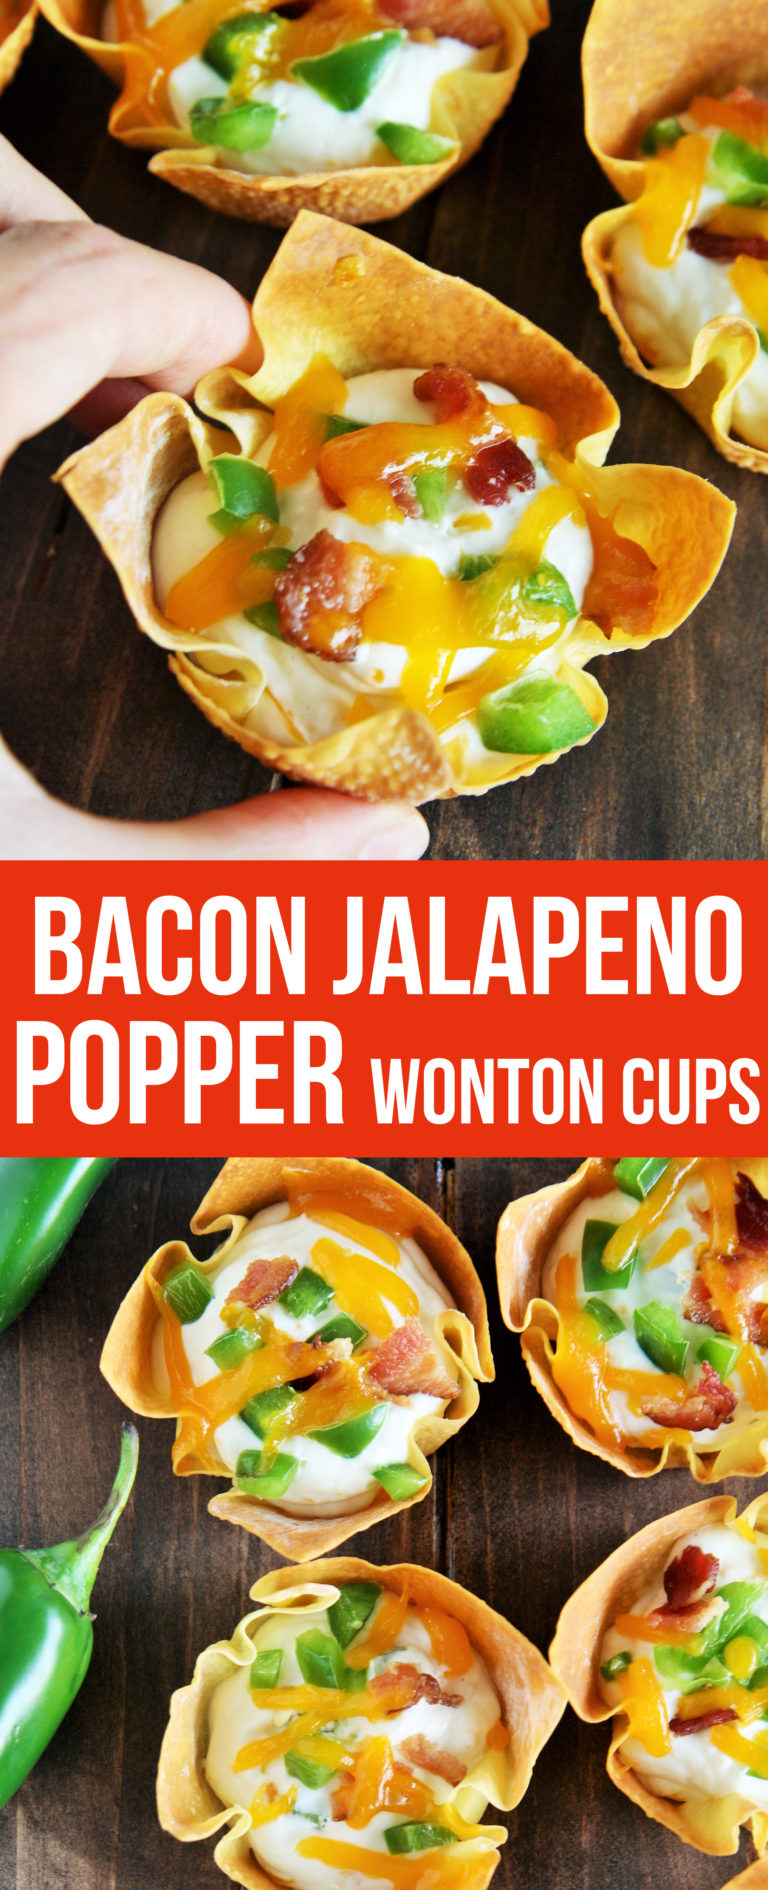 Bacon Jalapeno Popper Wonton Cups - The Tasty Bite